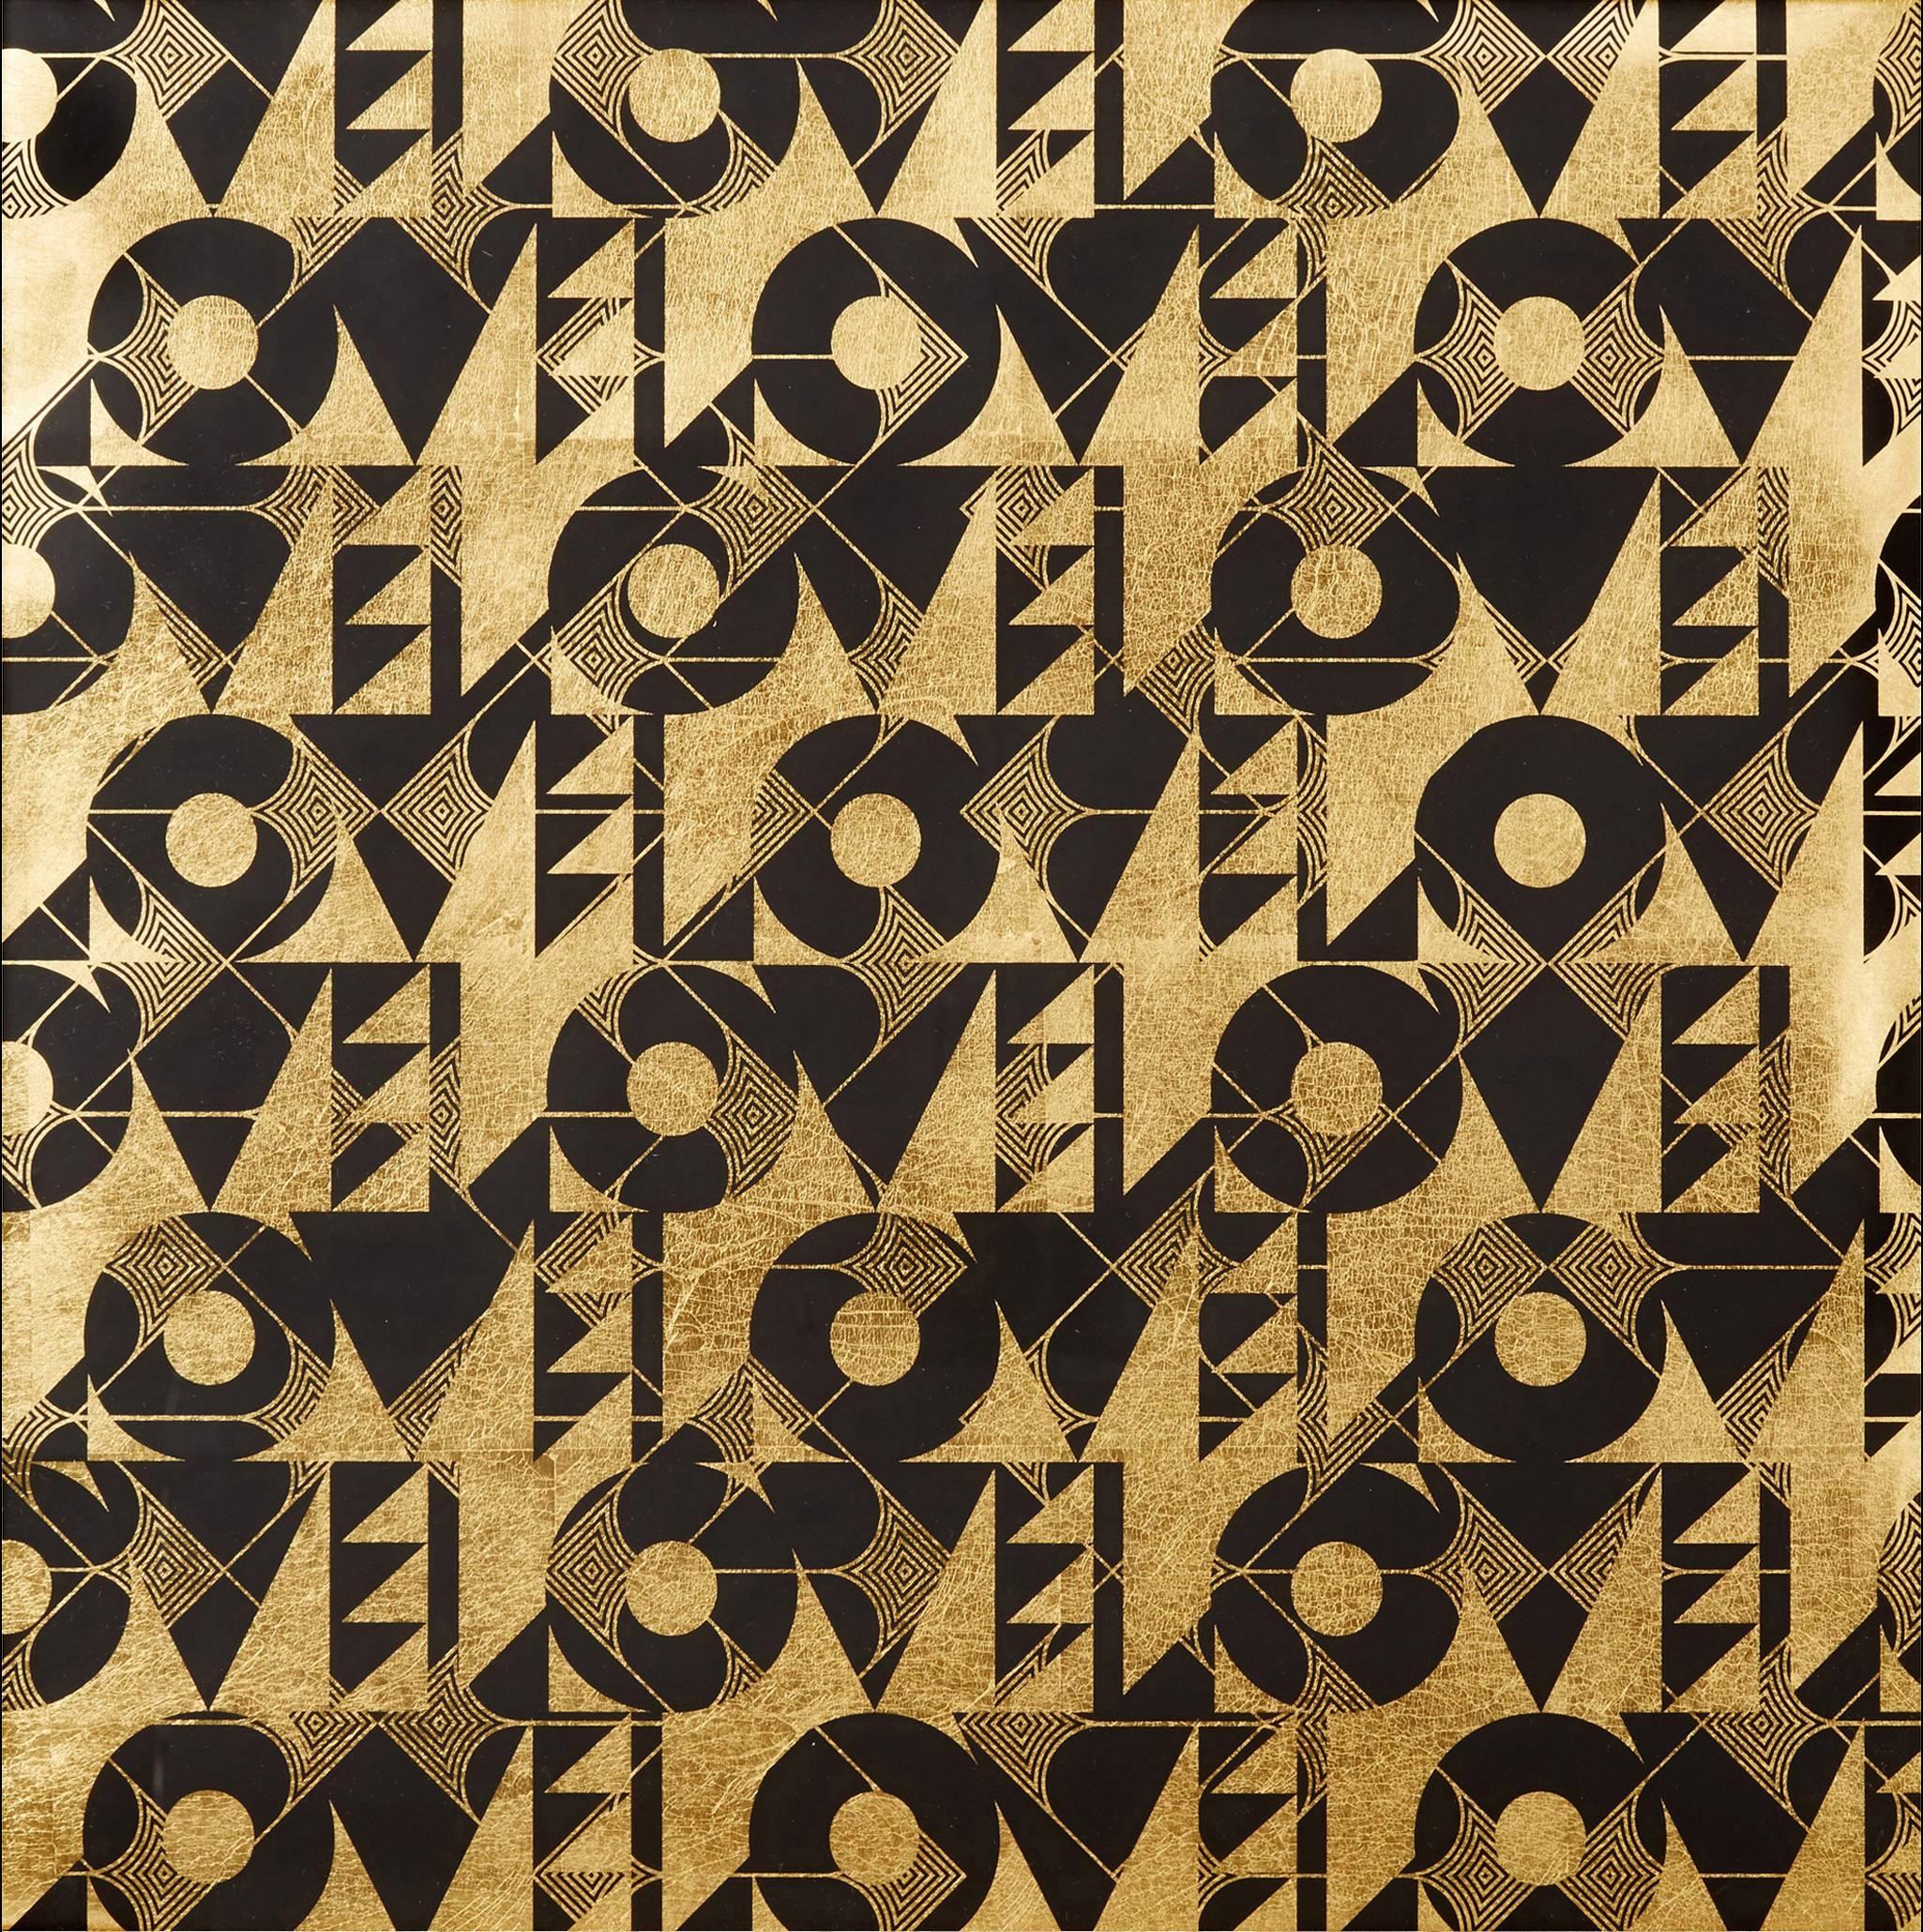 Love and Arrows II (design gold black metallic work on paper Art Deco pattern) - Mixed Media Art by Lisa Hunt